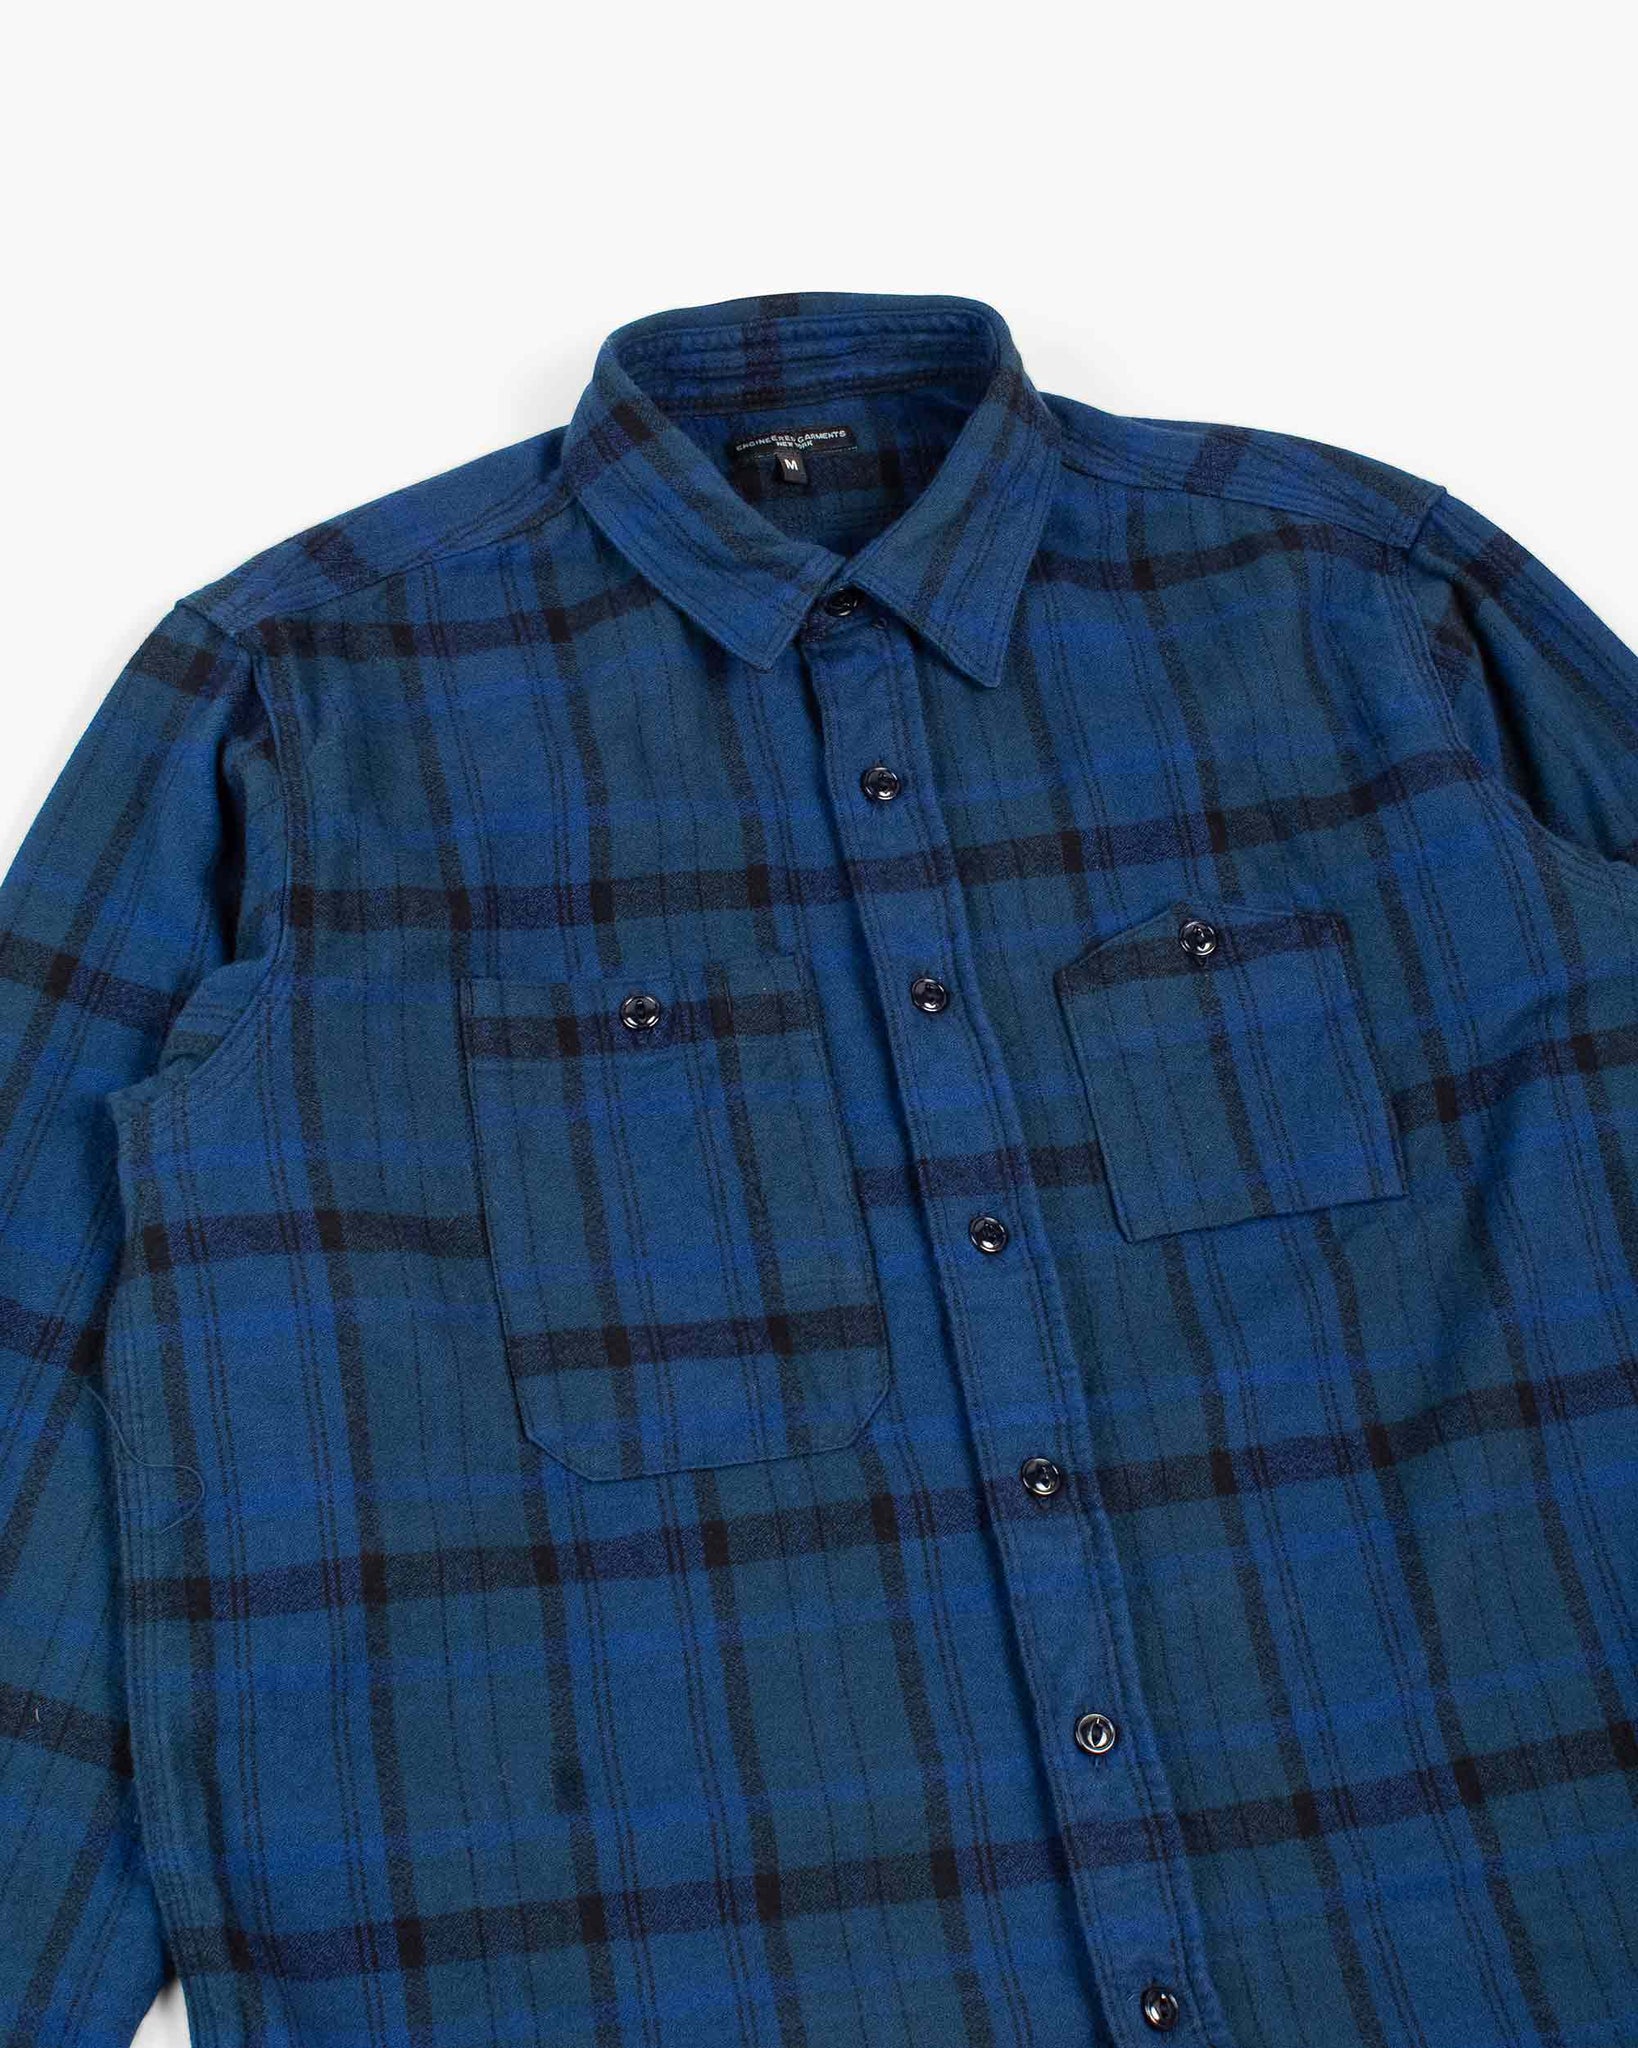 Engineered Garments Work Shirt Navy/Black Plaid Cotton Flannel